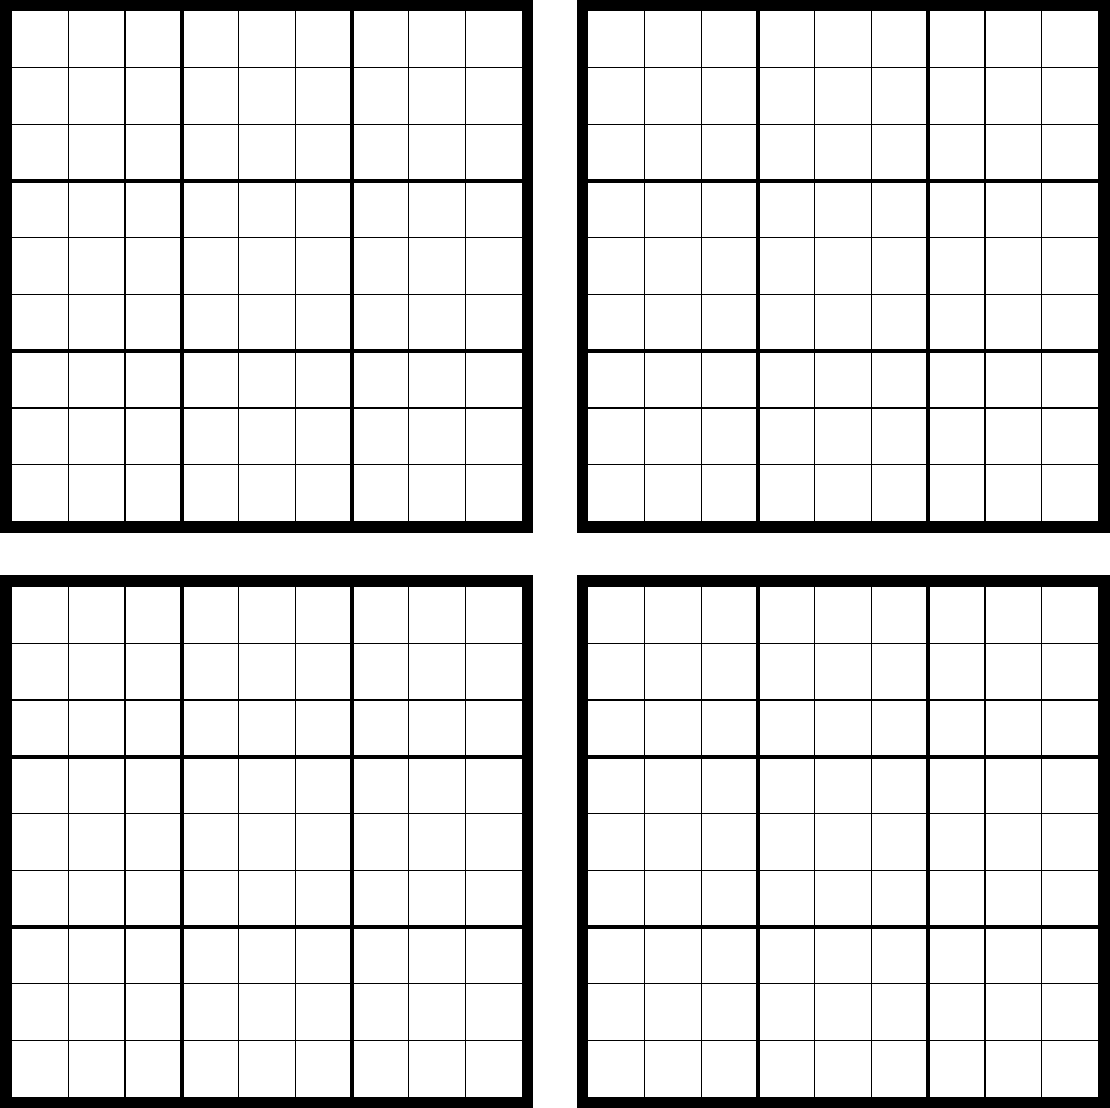 free-sudoku-blank-pdf-32kb-1-page-s